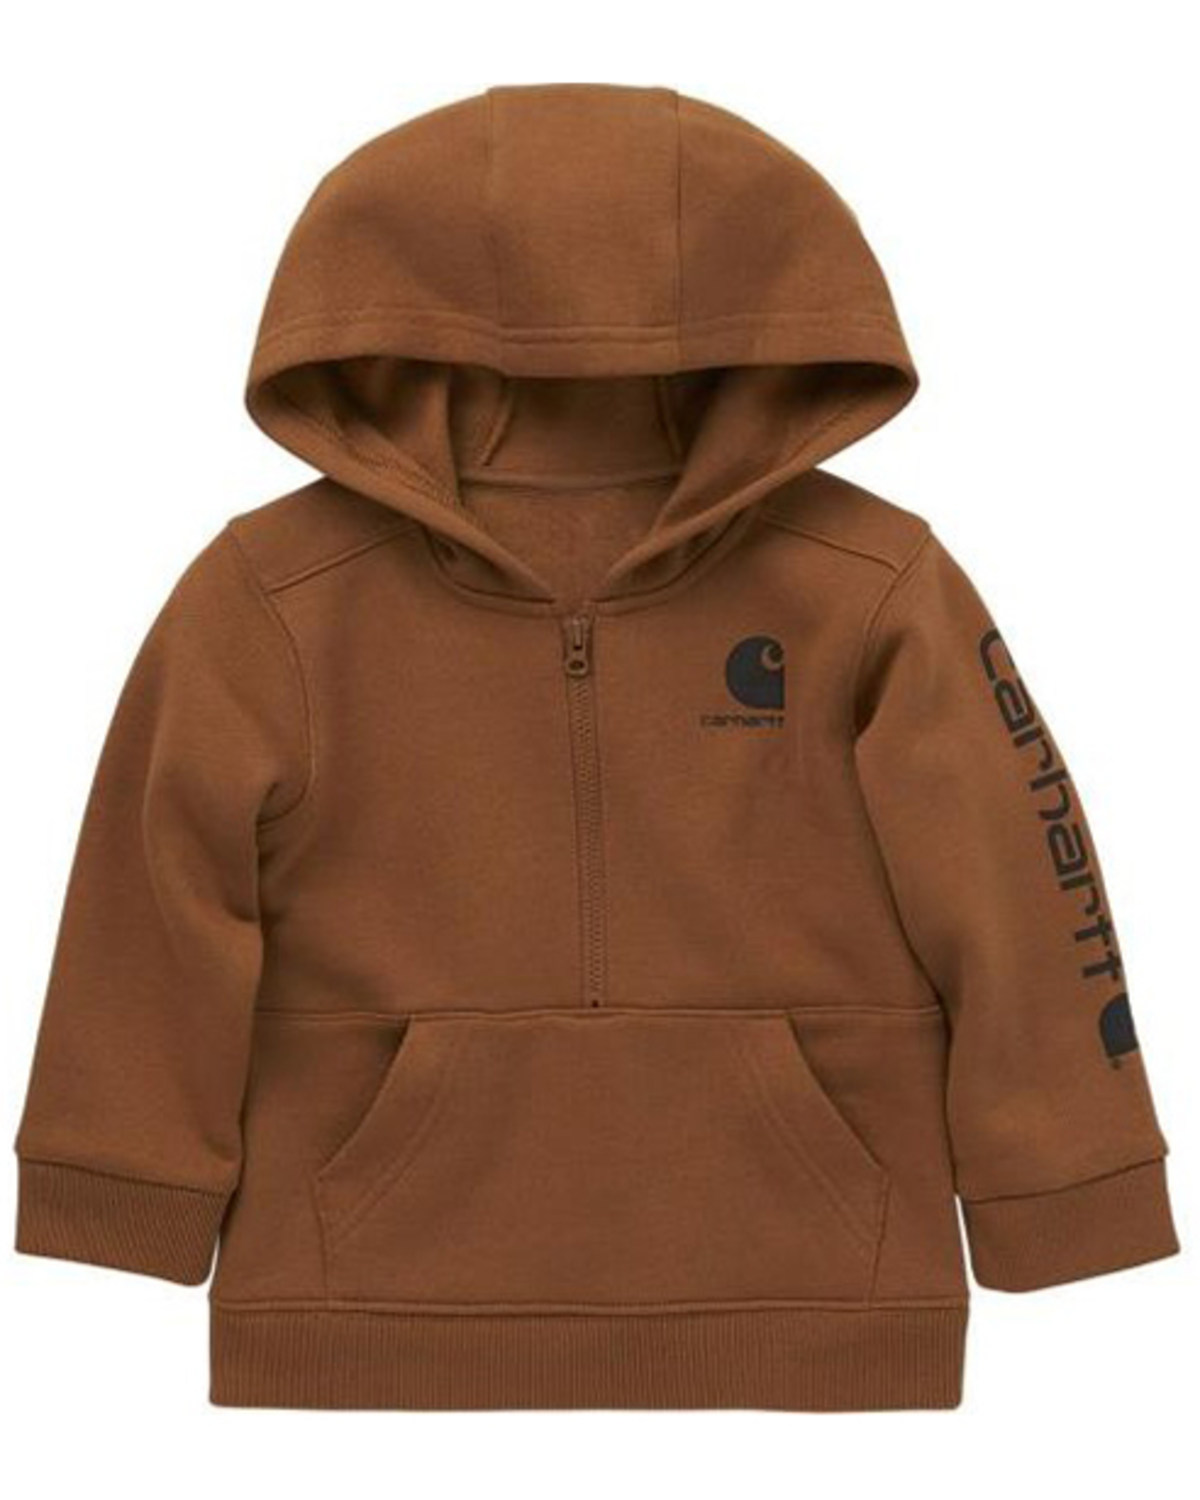 Carhartt Toddler Boys' Half Zip Hooded Sweatshirt